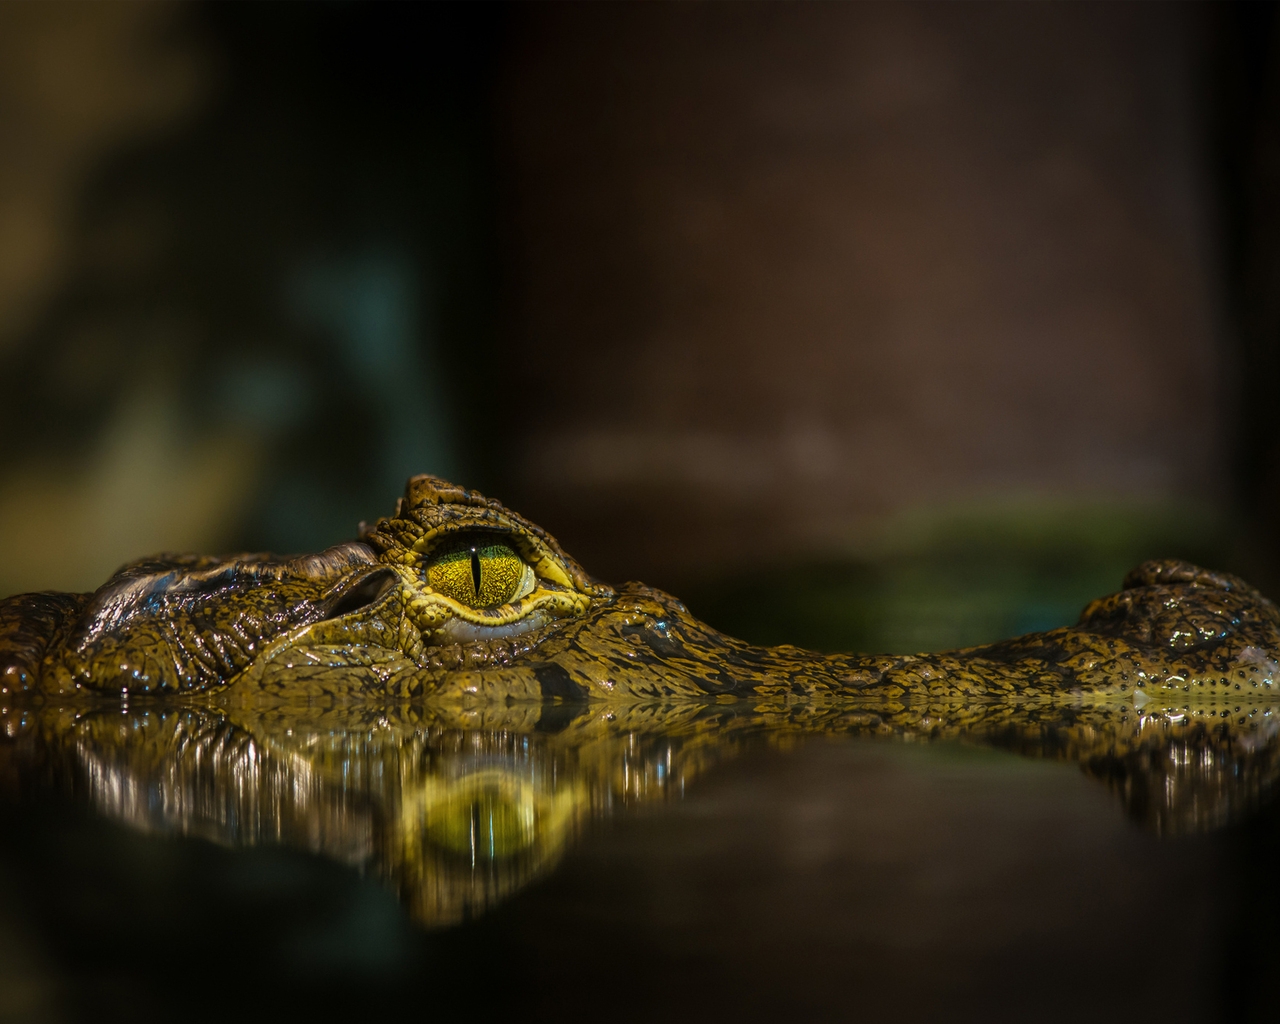 Crocodile for 1280 x 1024 resolution